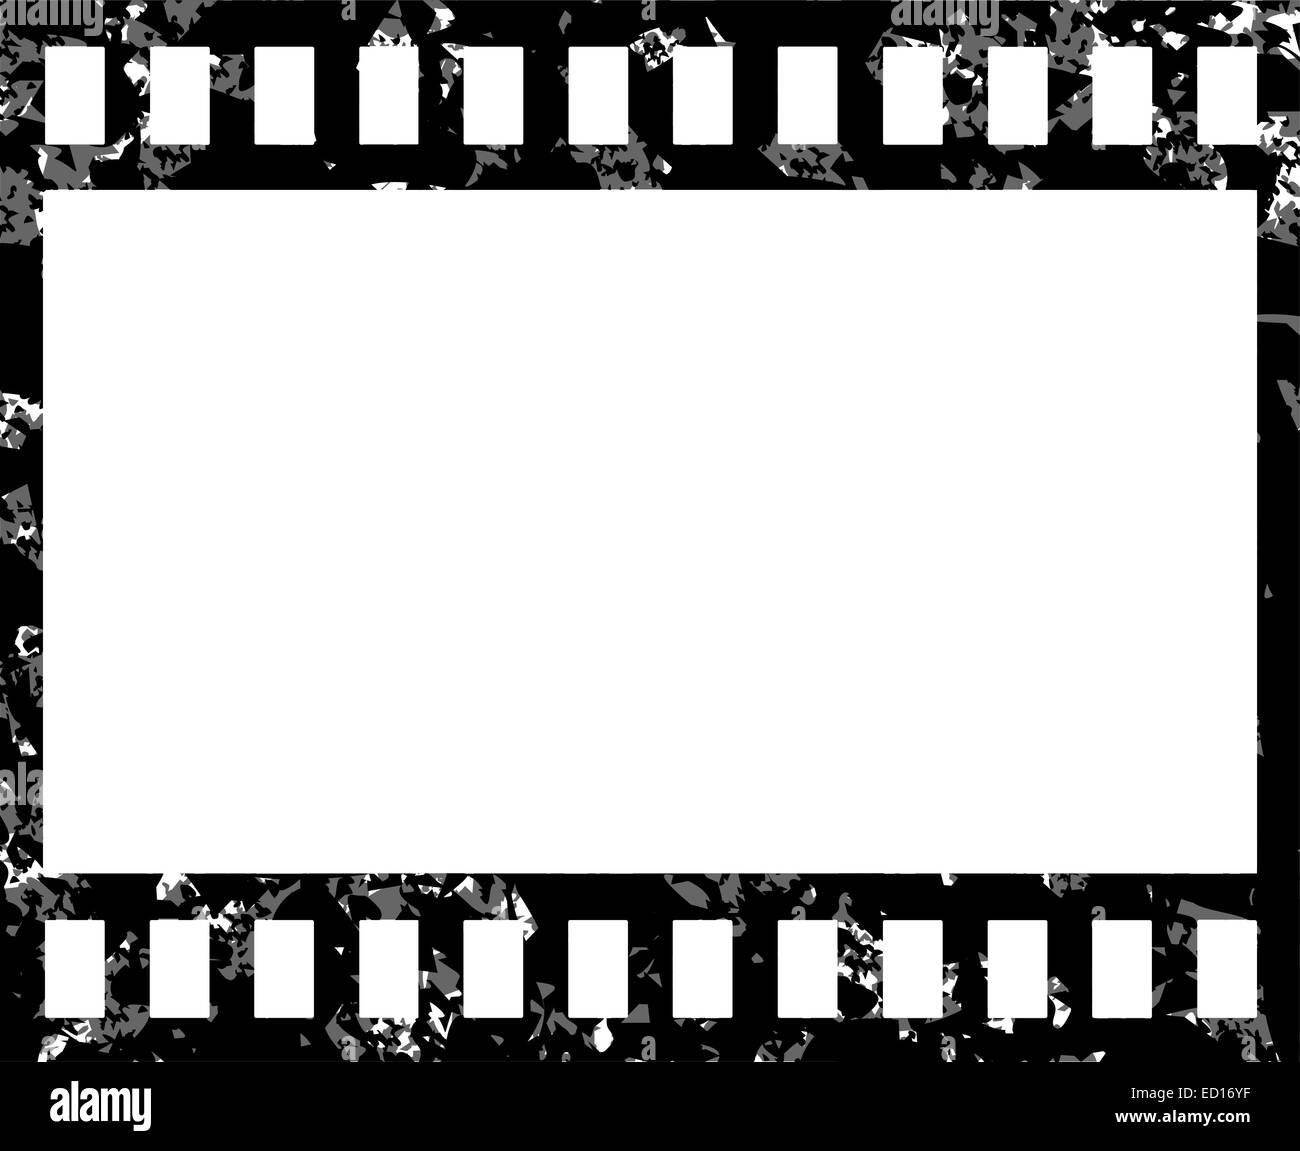 Grunge blank film strip Stock Photo